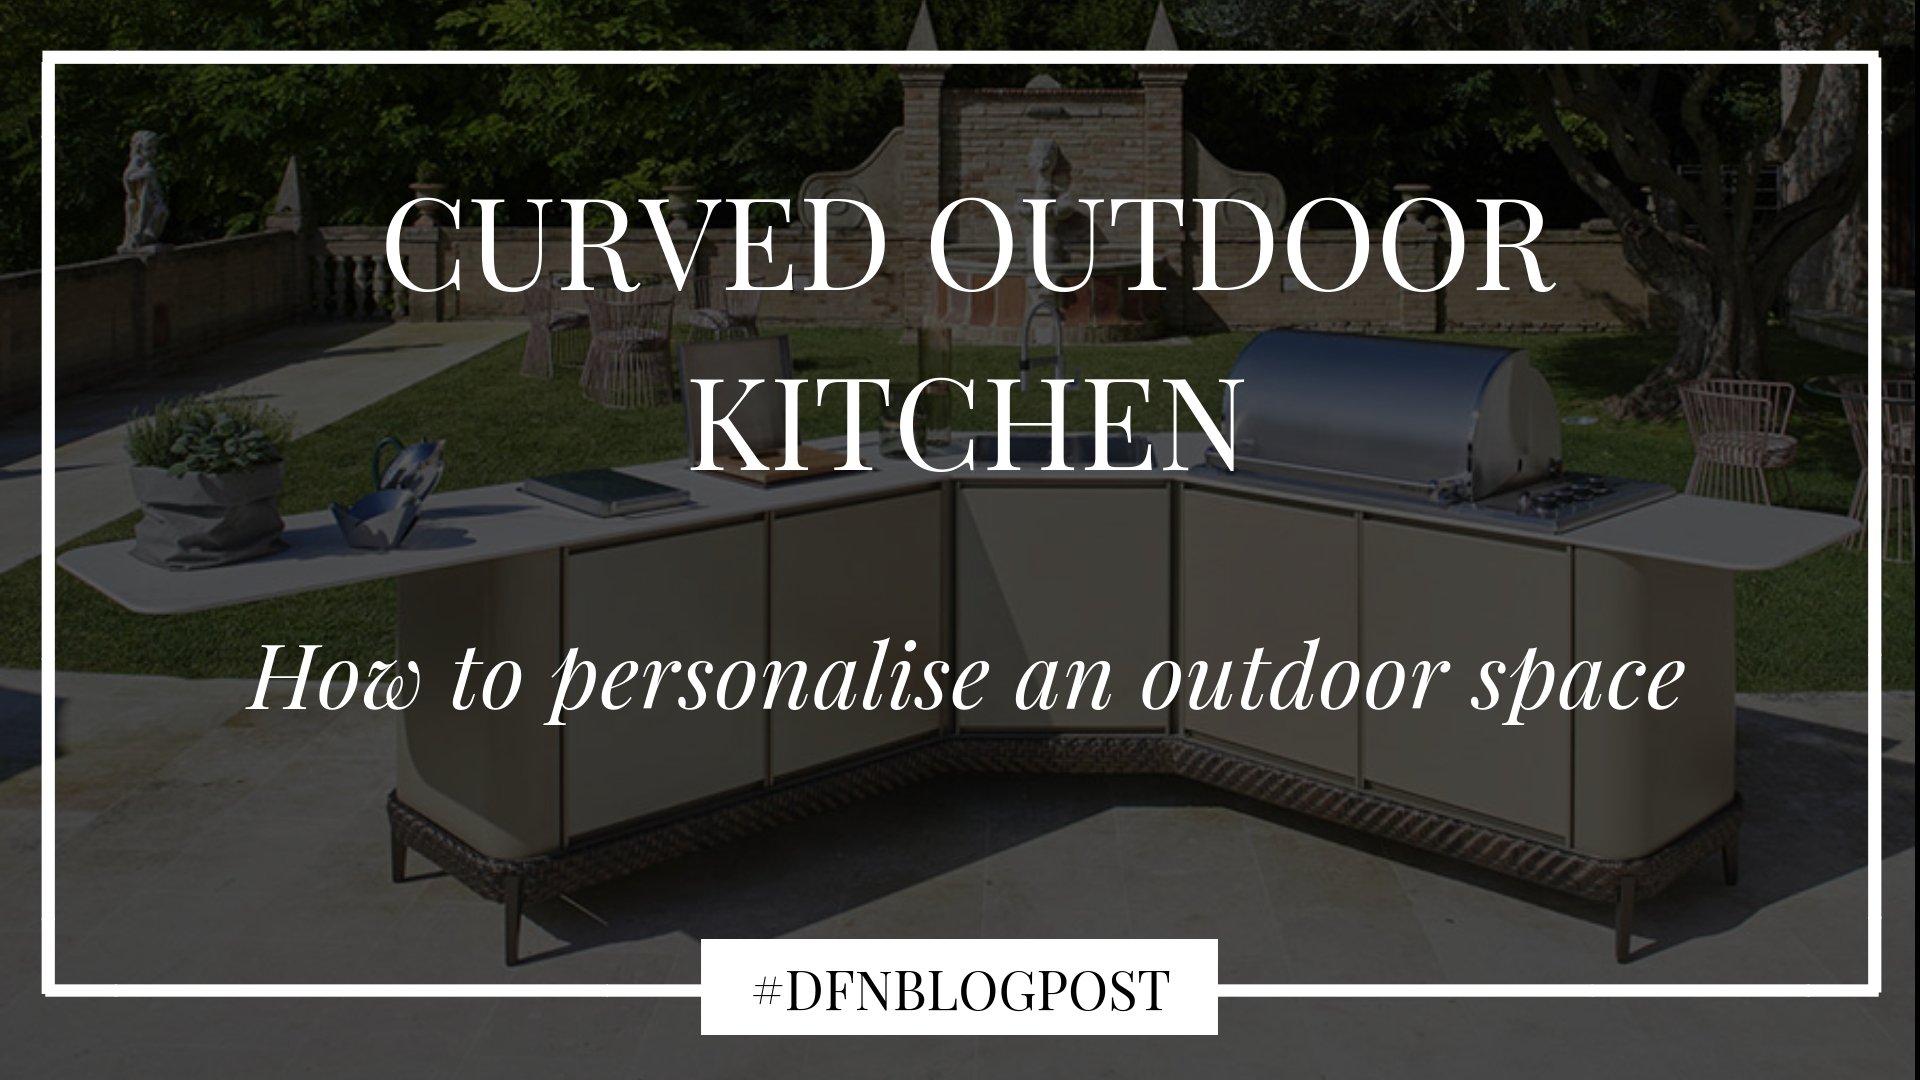 dfn-curved-outdoor-kitchen